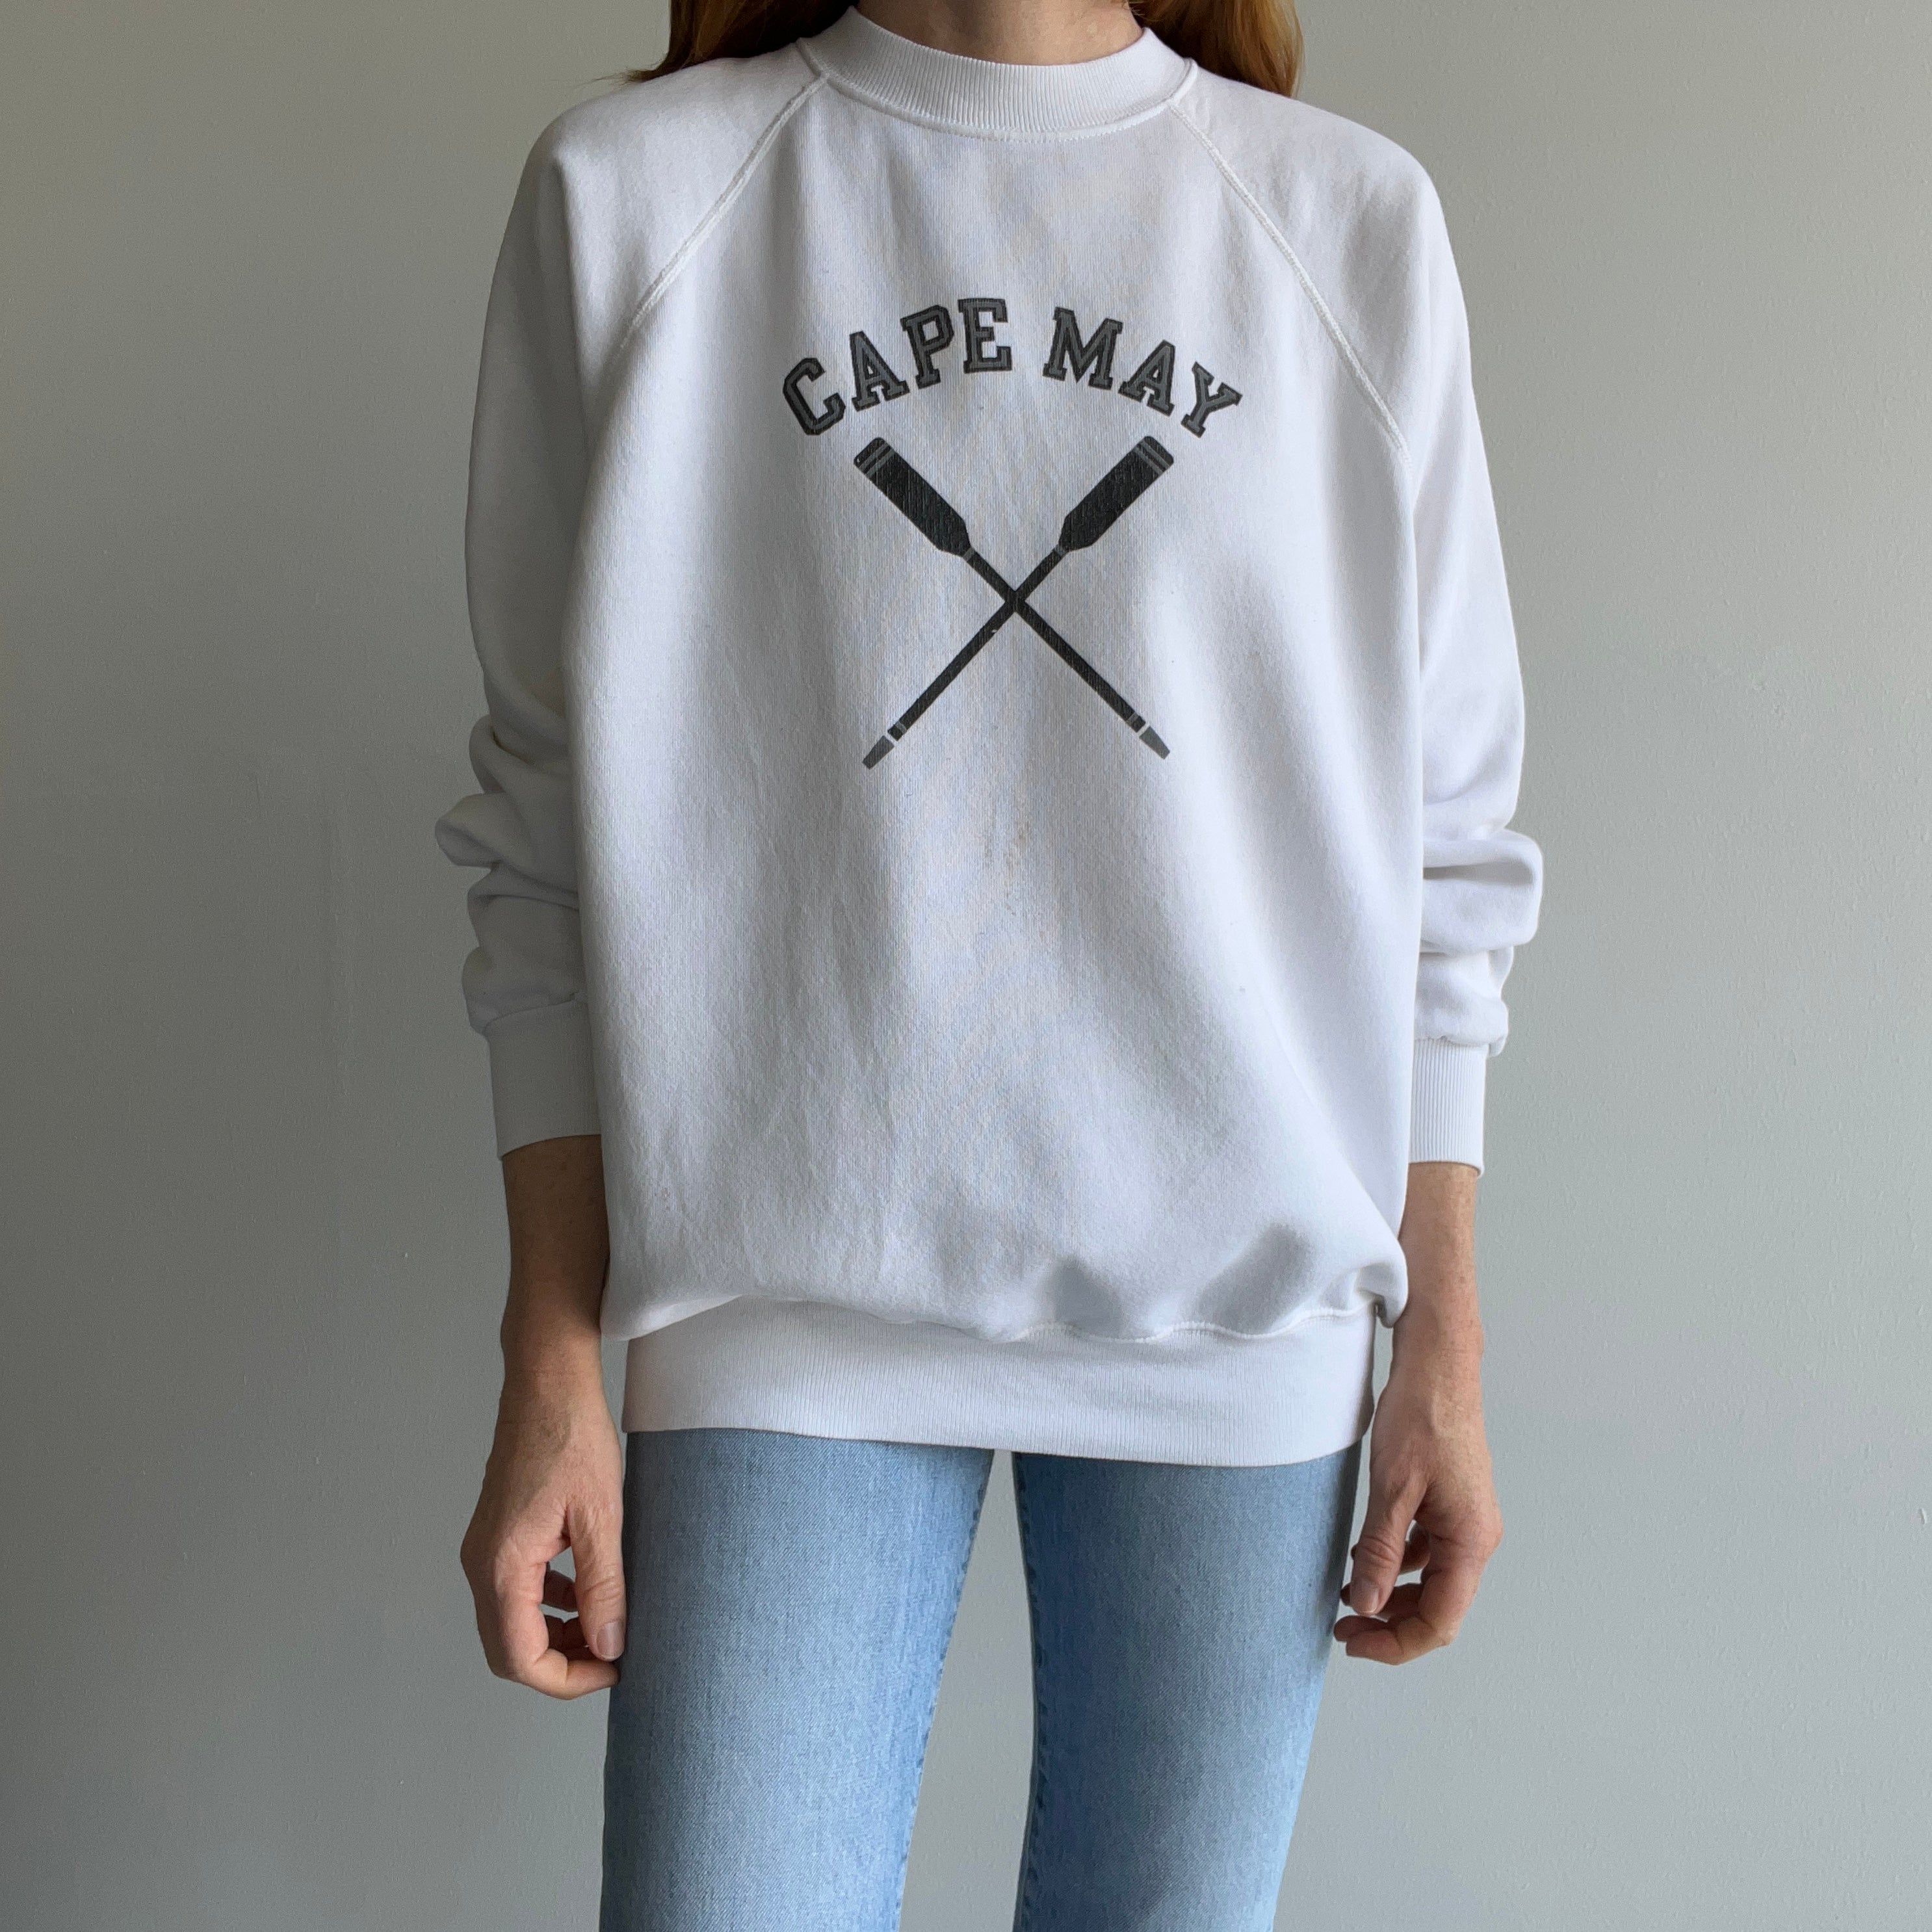 1980s Cape May Sweatshirt